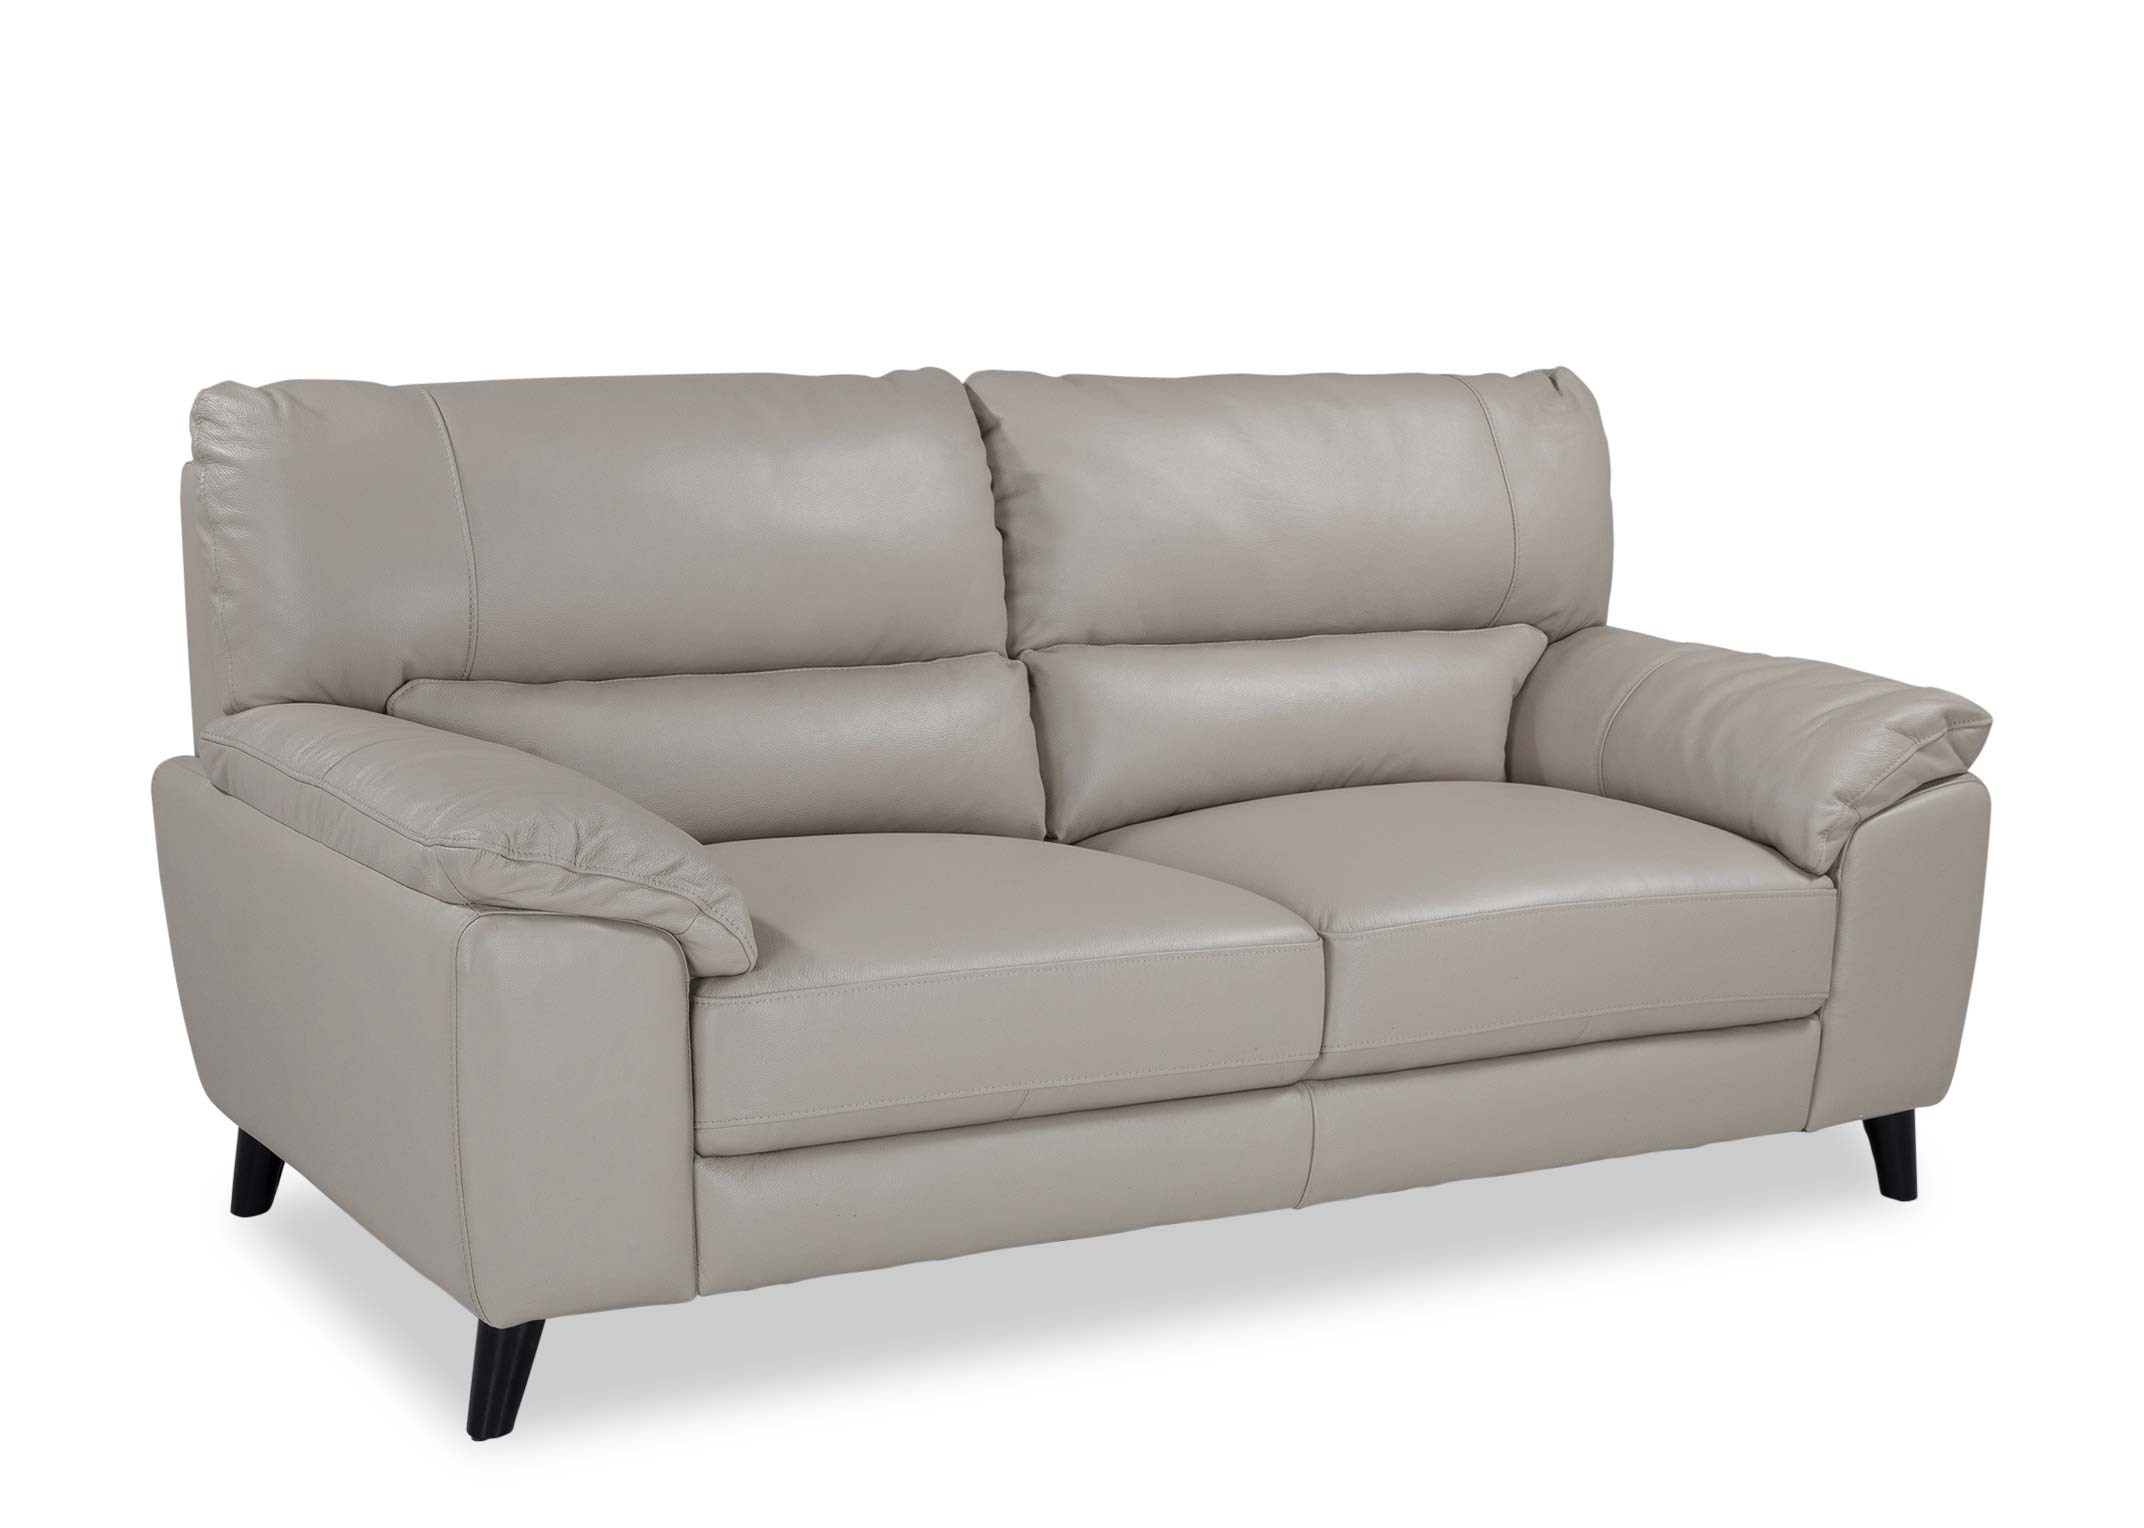 3 Seater Brown Leather Sofa - Torino - EZ Living Furniture